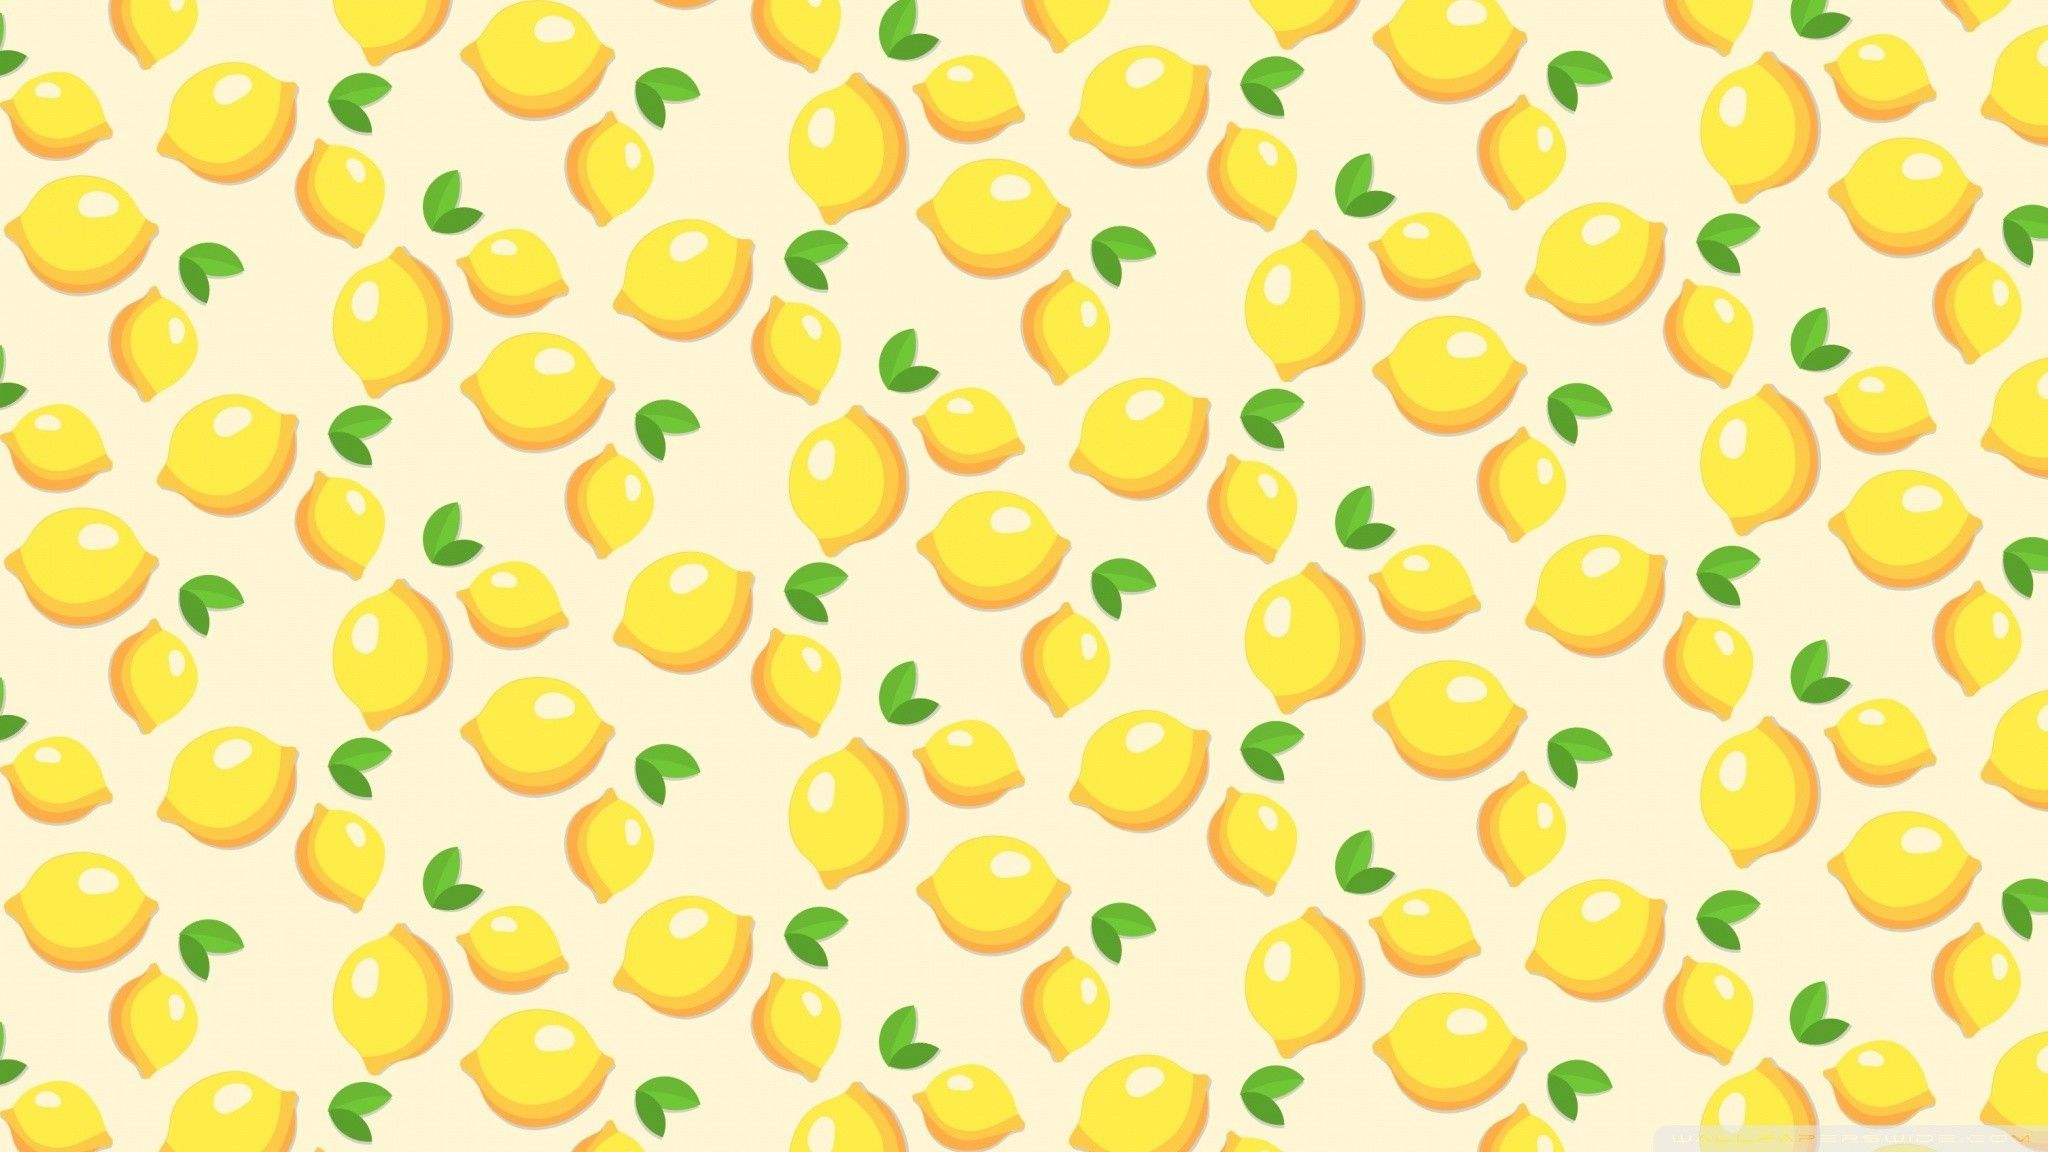 Yellow Desktop Wallpaper